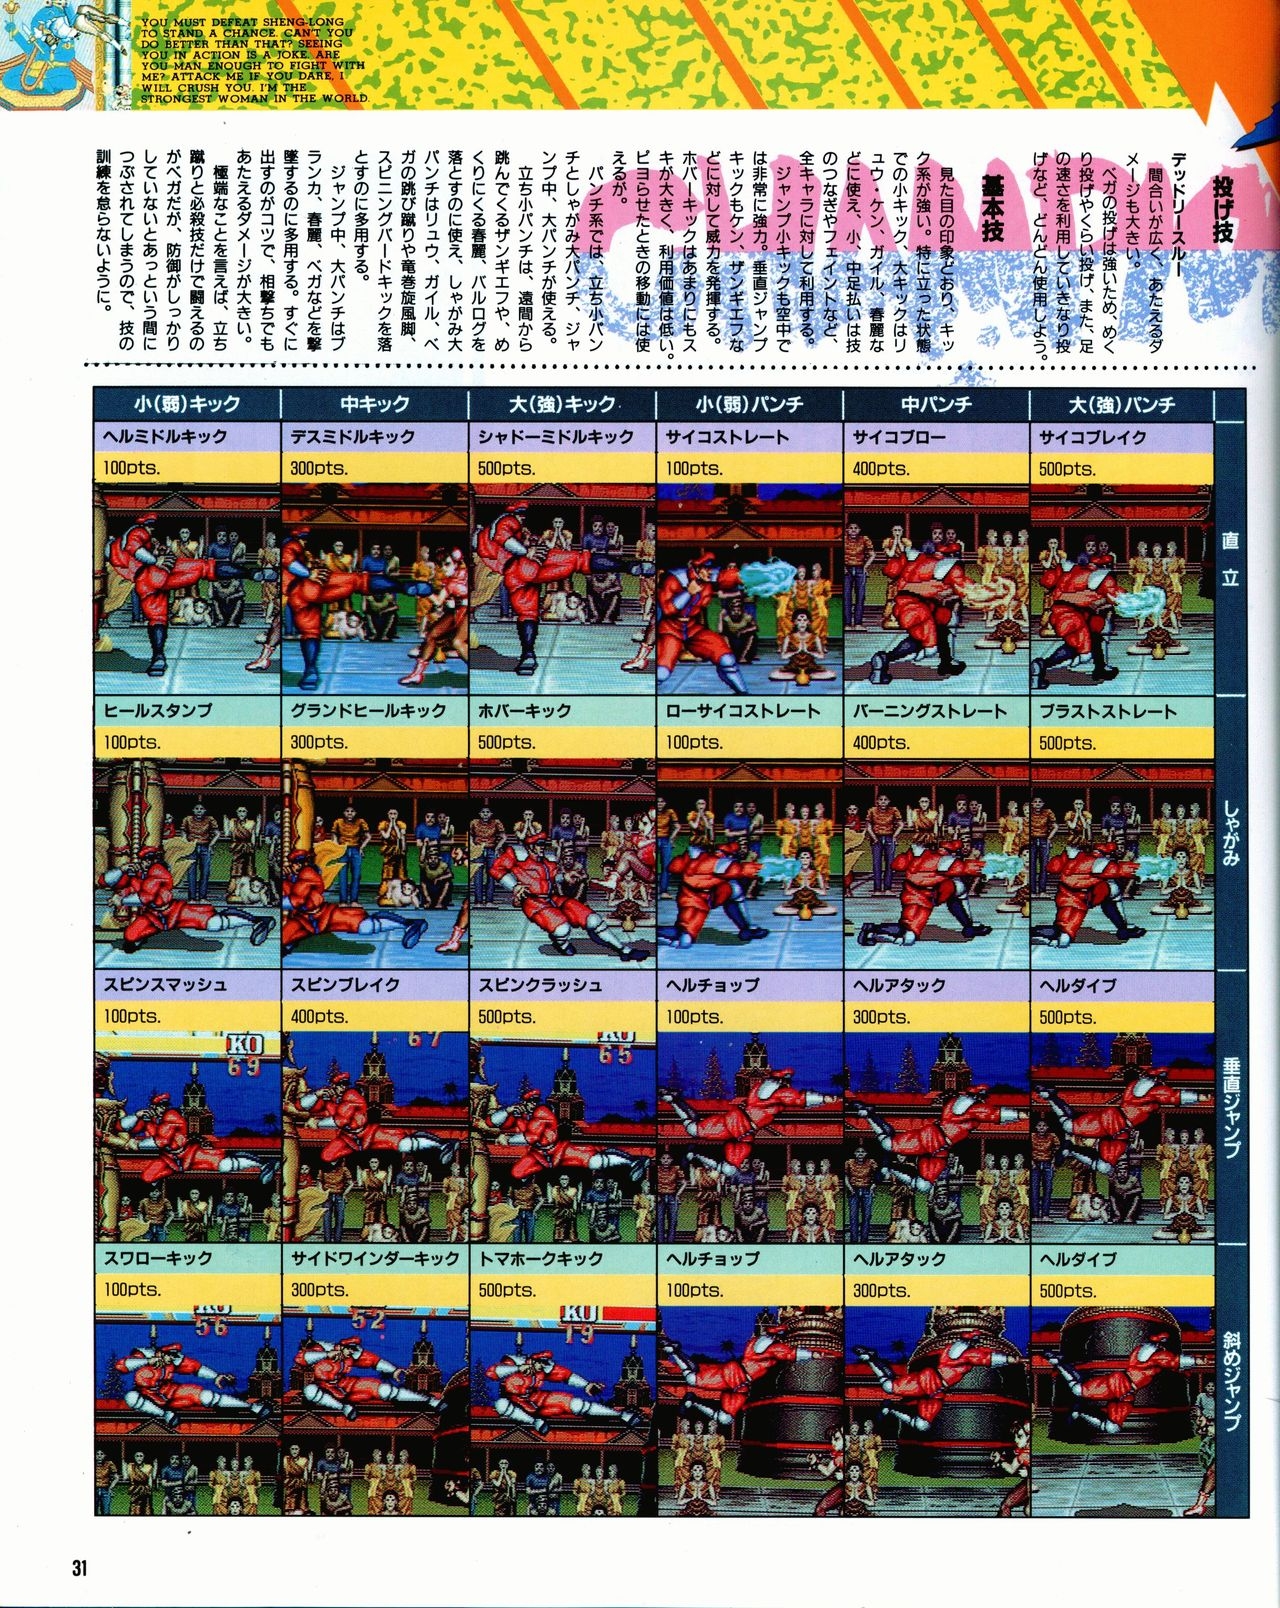 Street Fighter II Dash - Gamest special issue 77 32